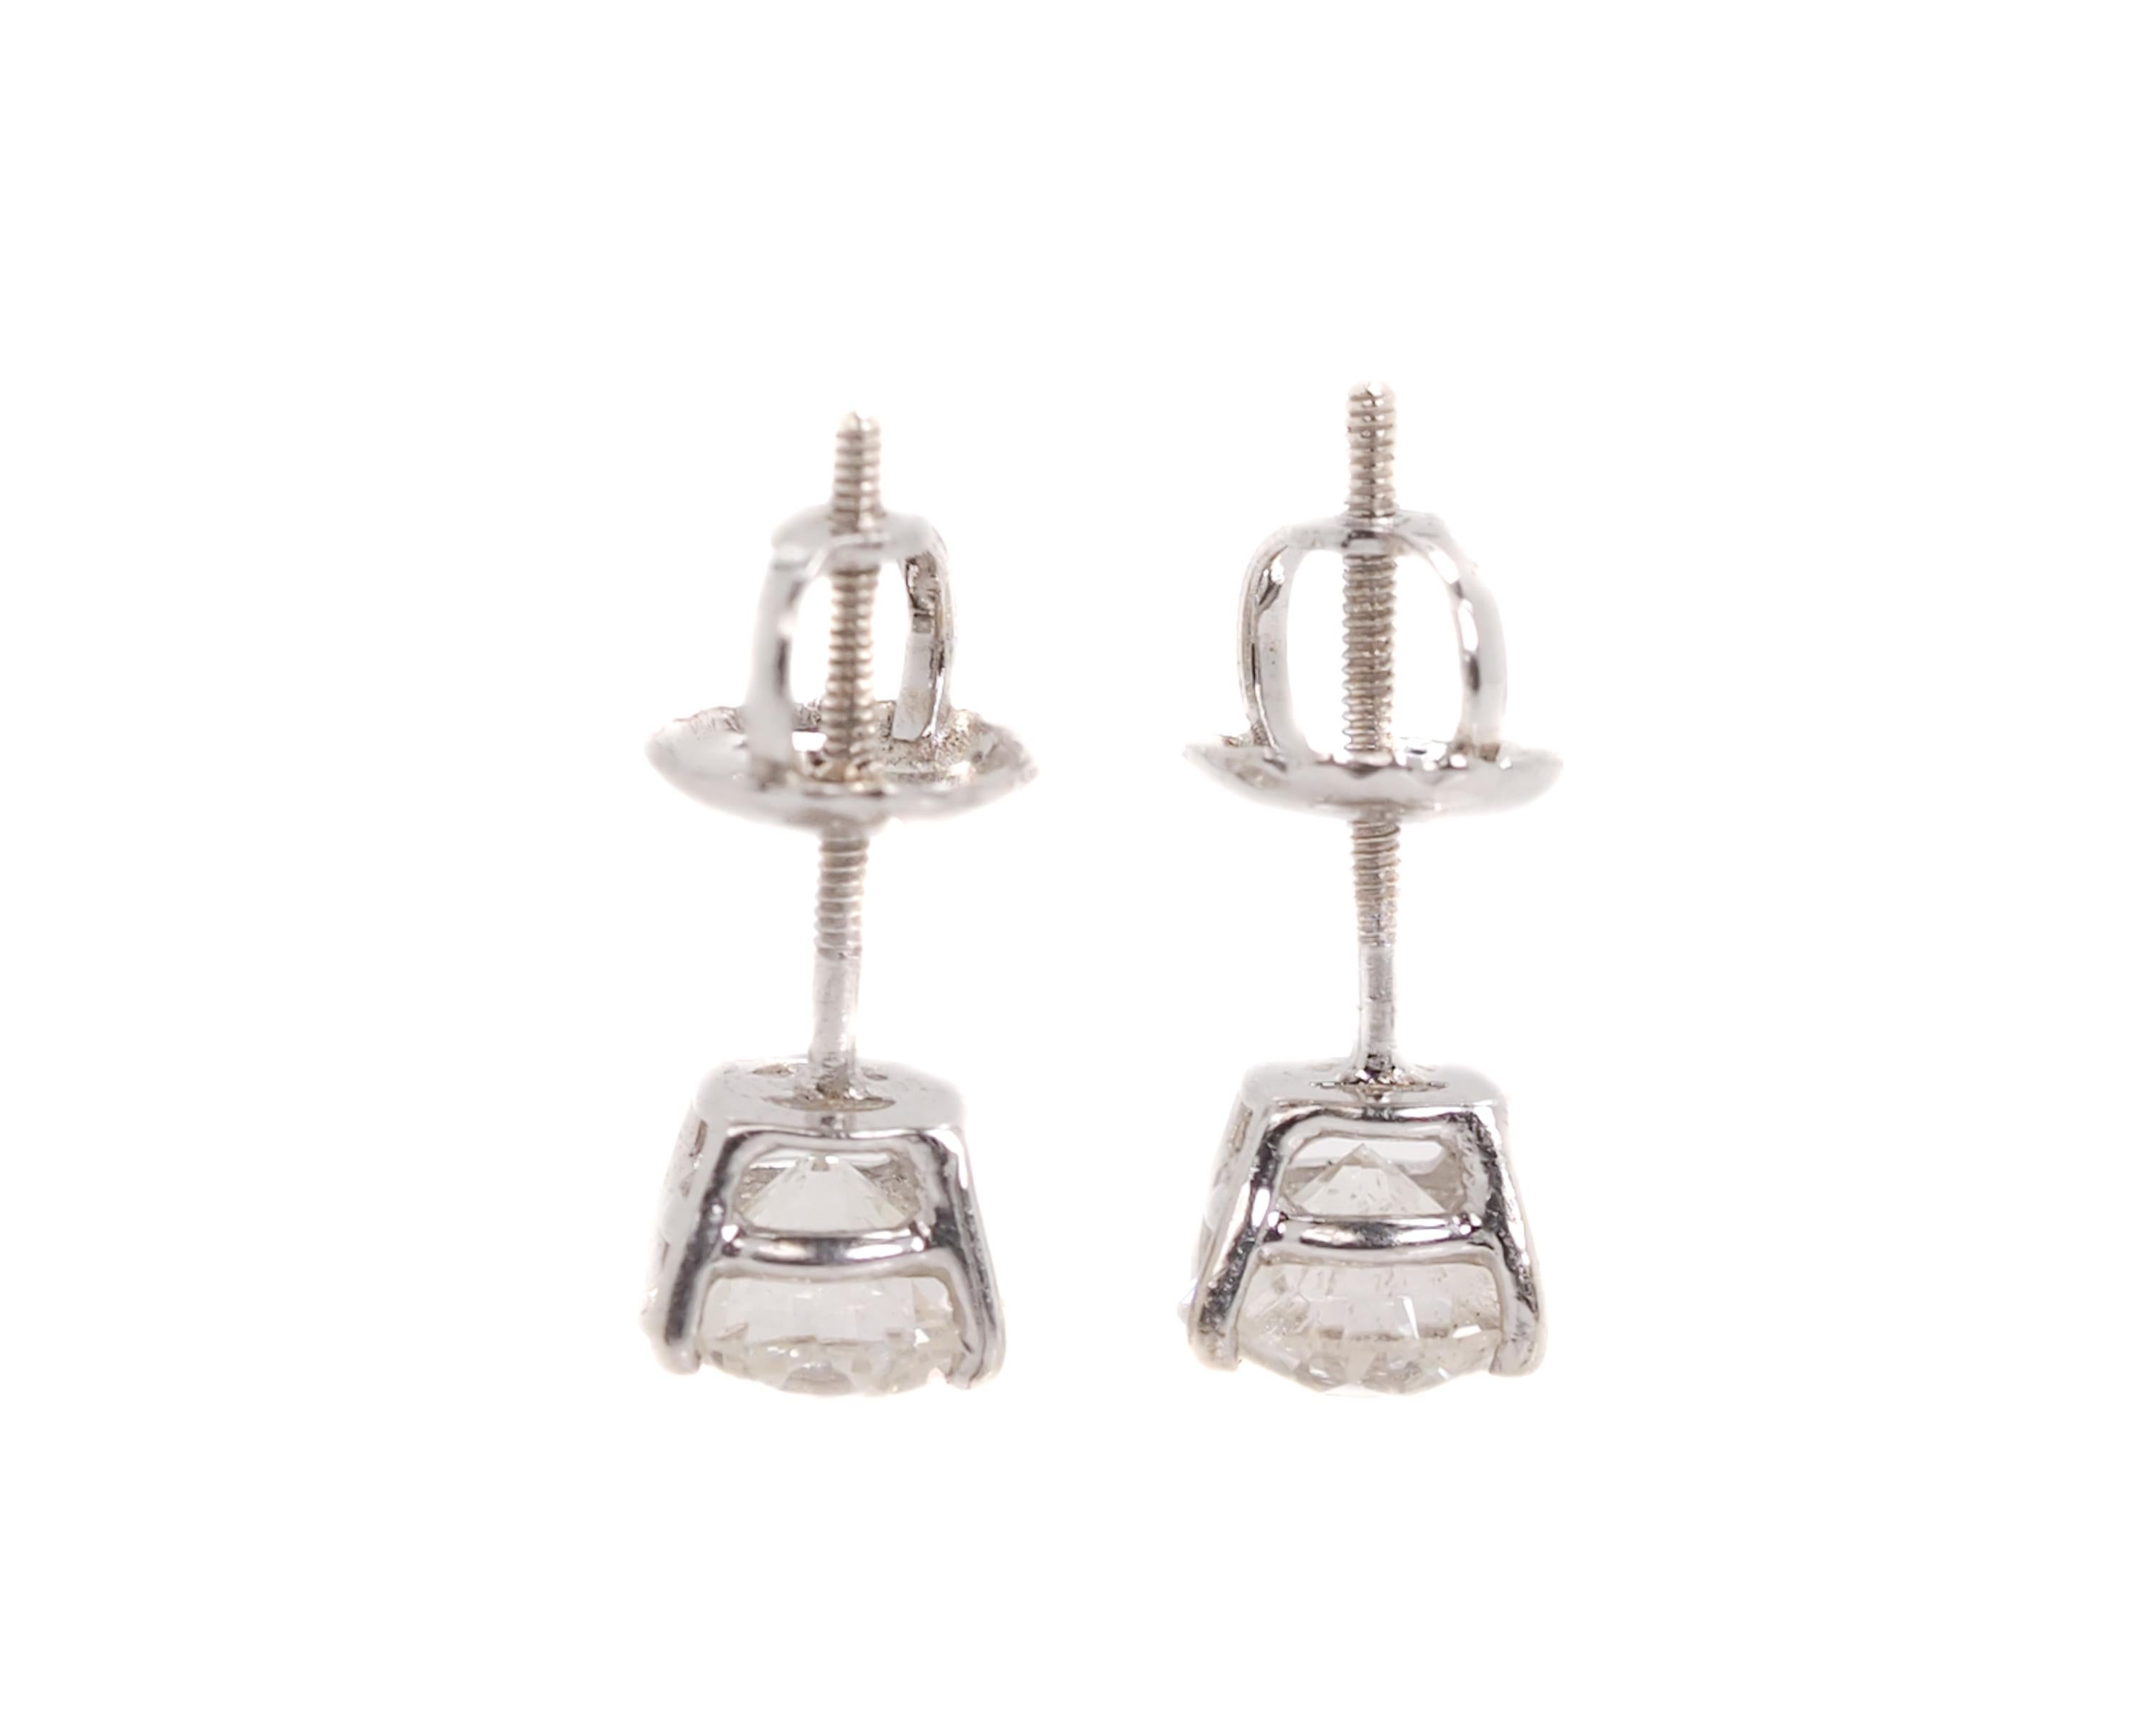 0.5 carat diamond earrings